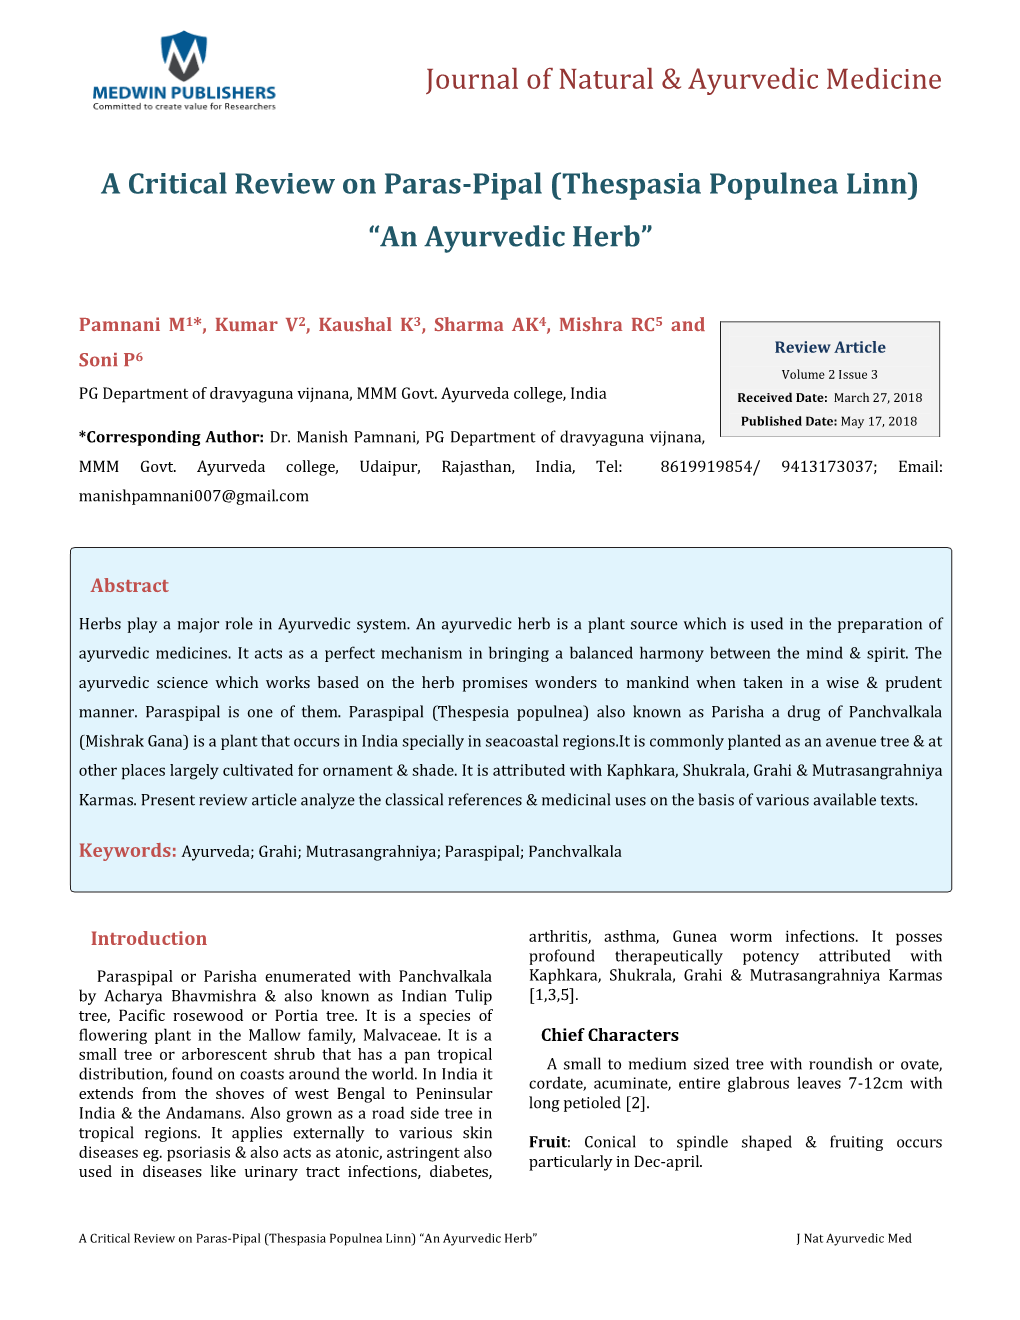 A Critical Review on Paras-Pipal (Thespasia Populnea Linn) “An Ayurvedic Herb”